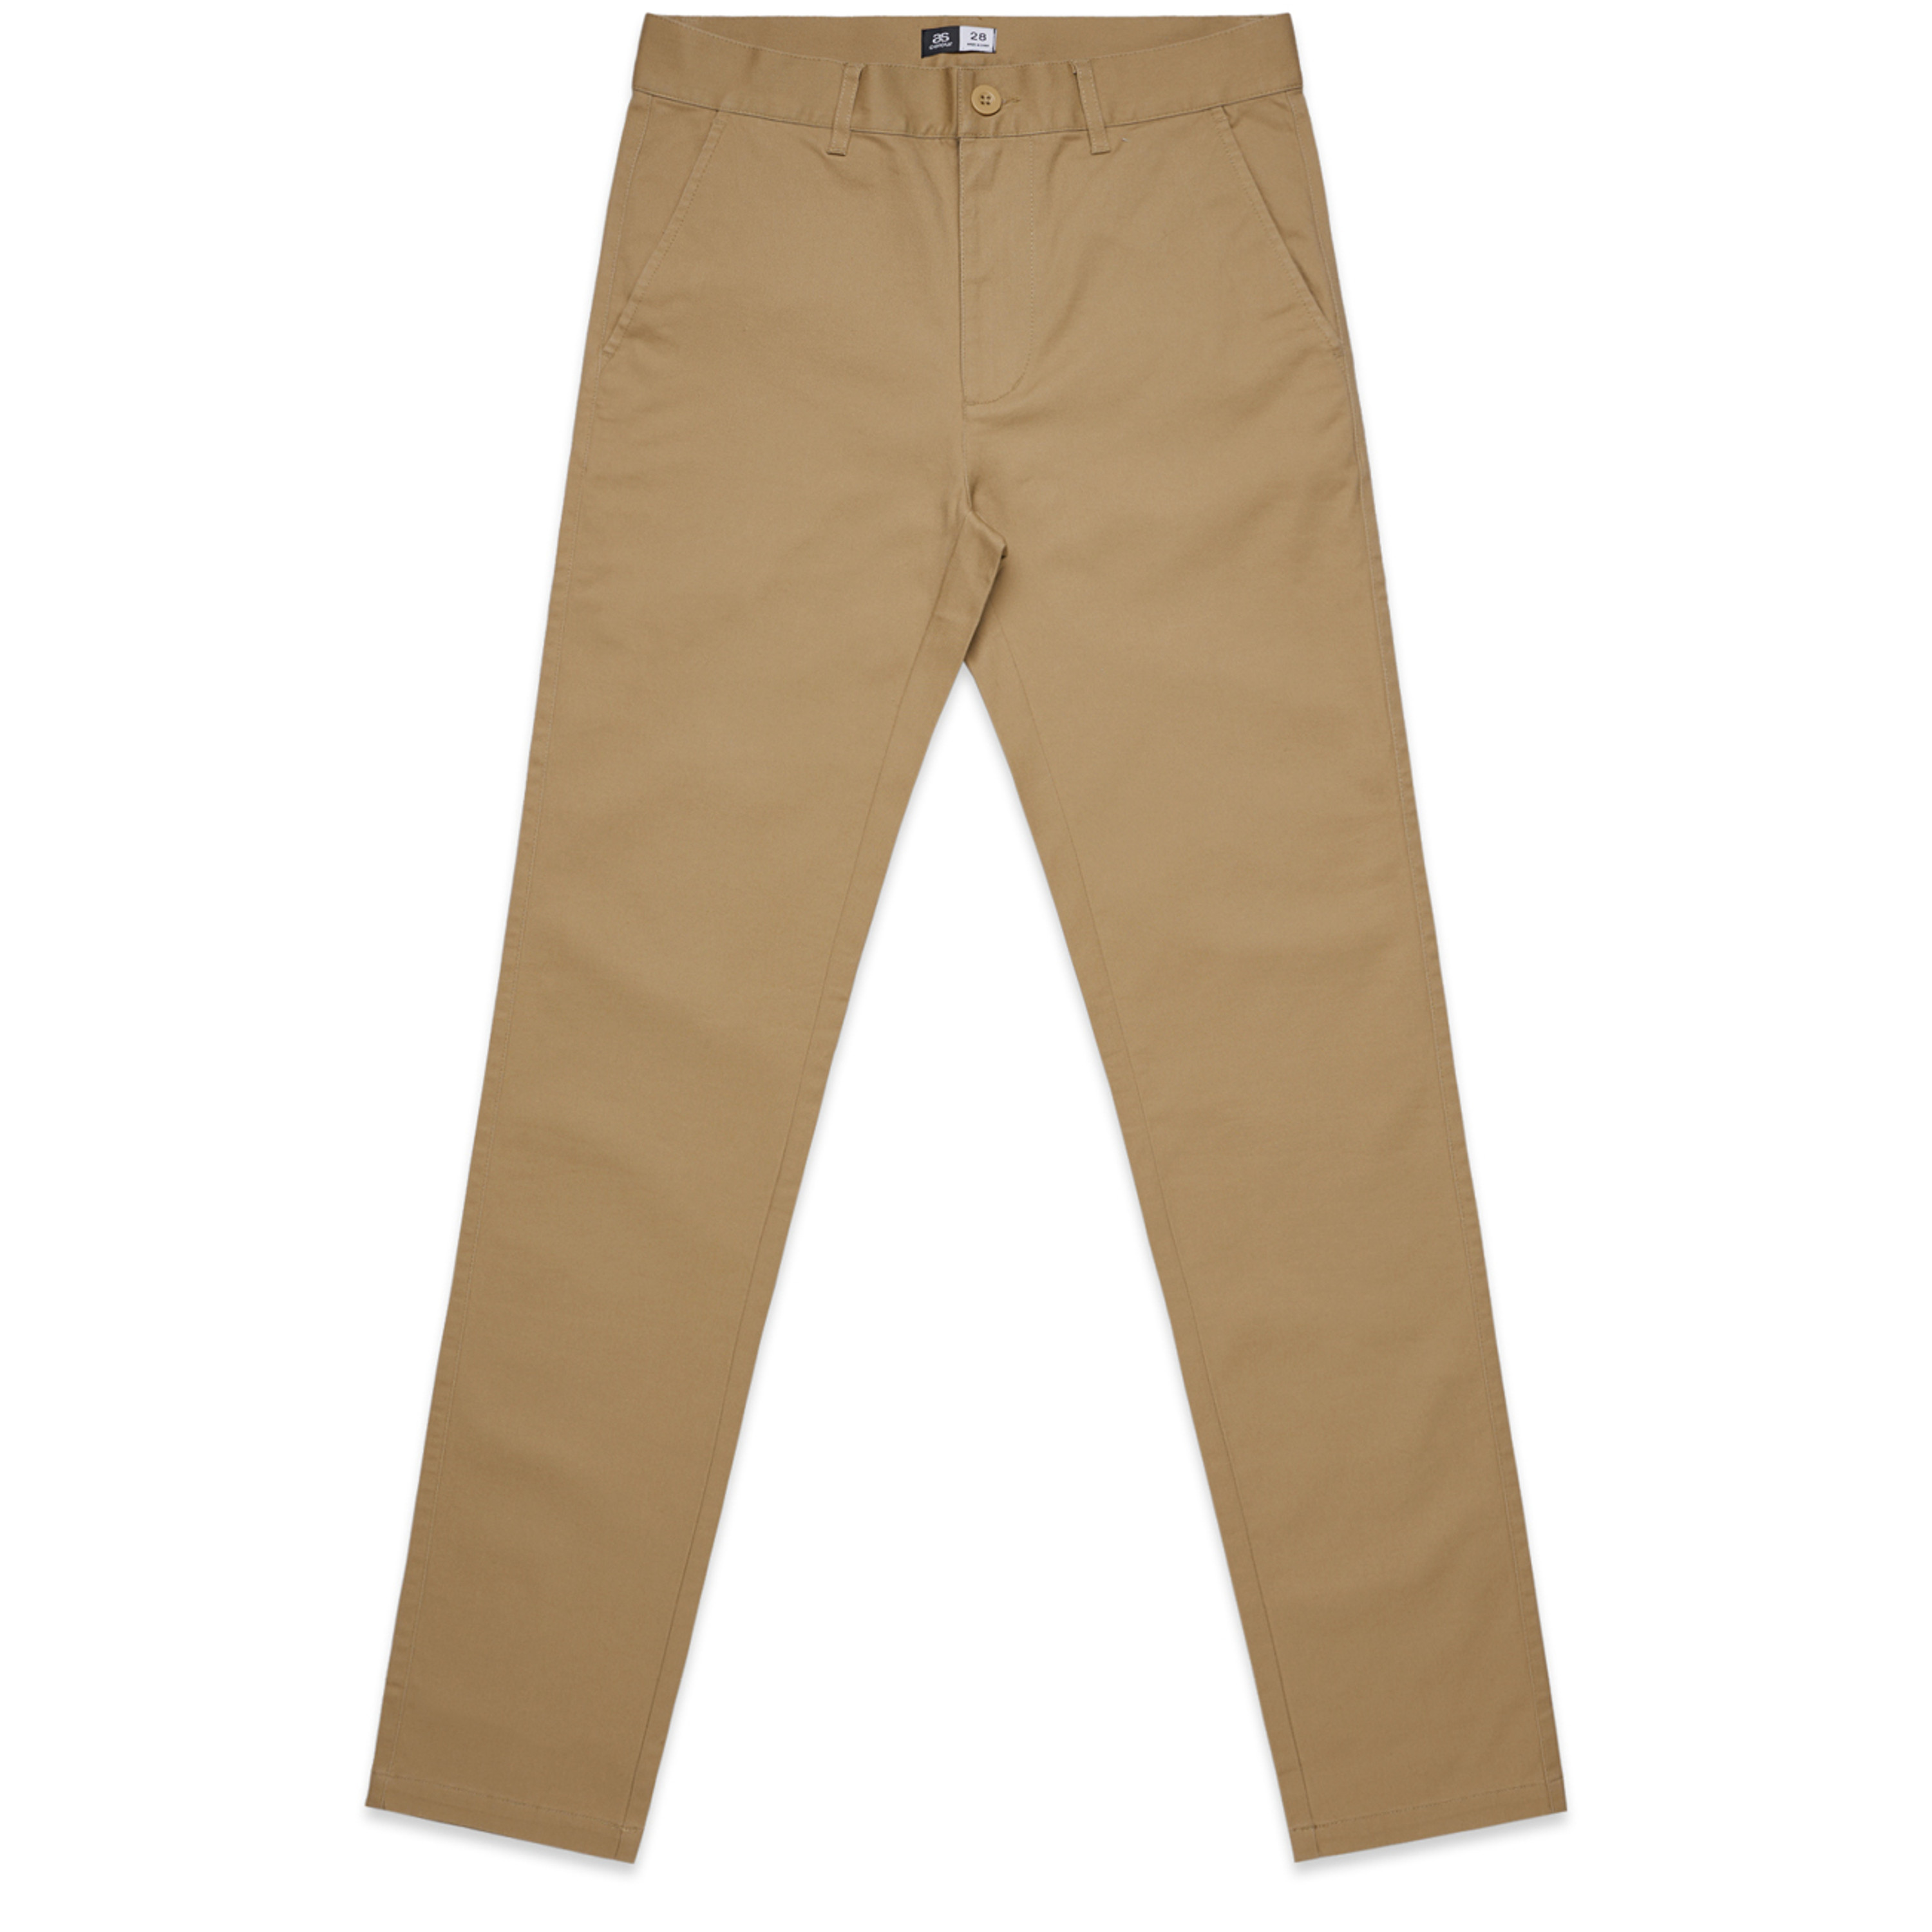 Mens Standard Pants - 5901